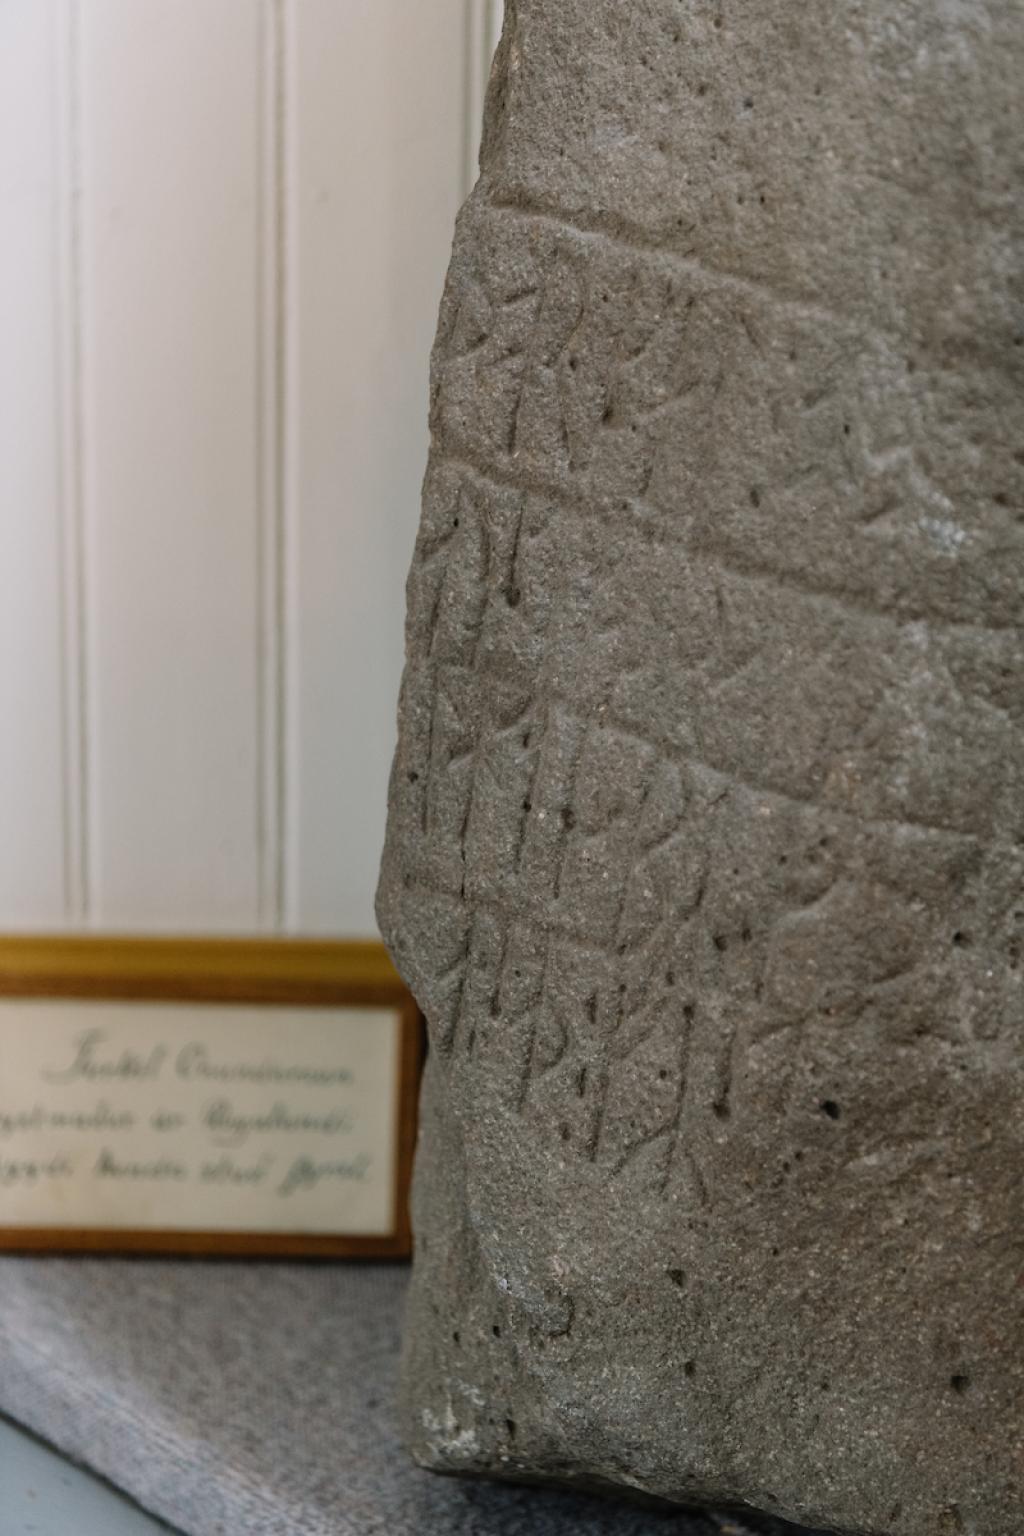 Runic stone, Sandavágur